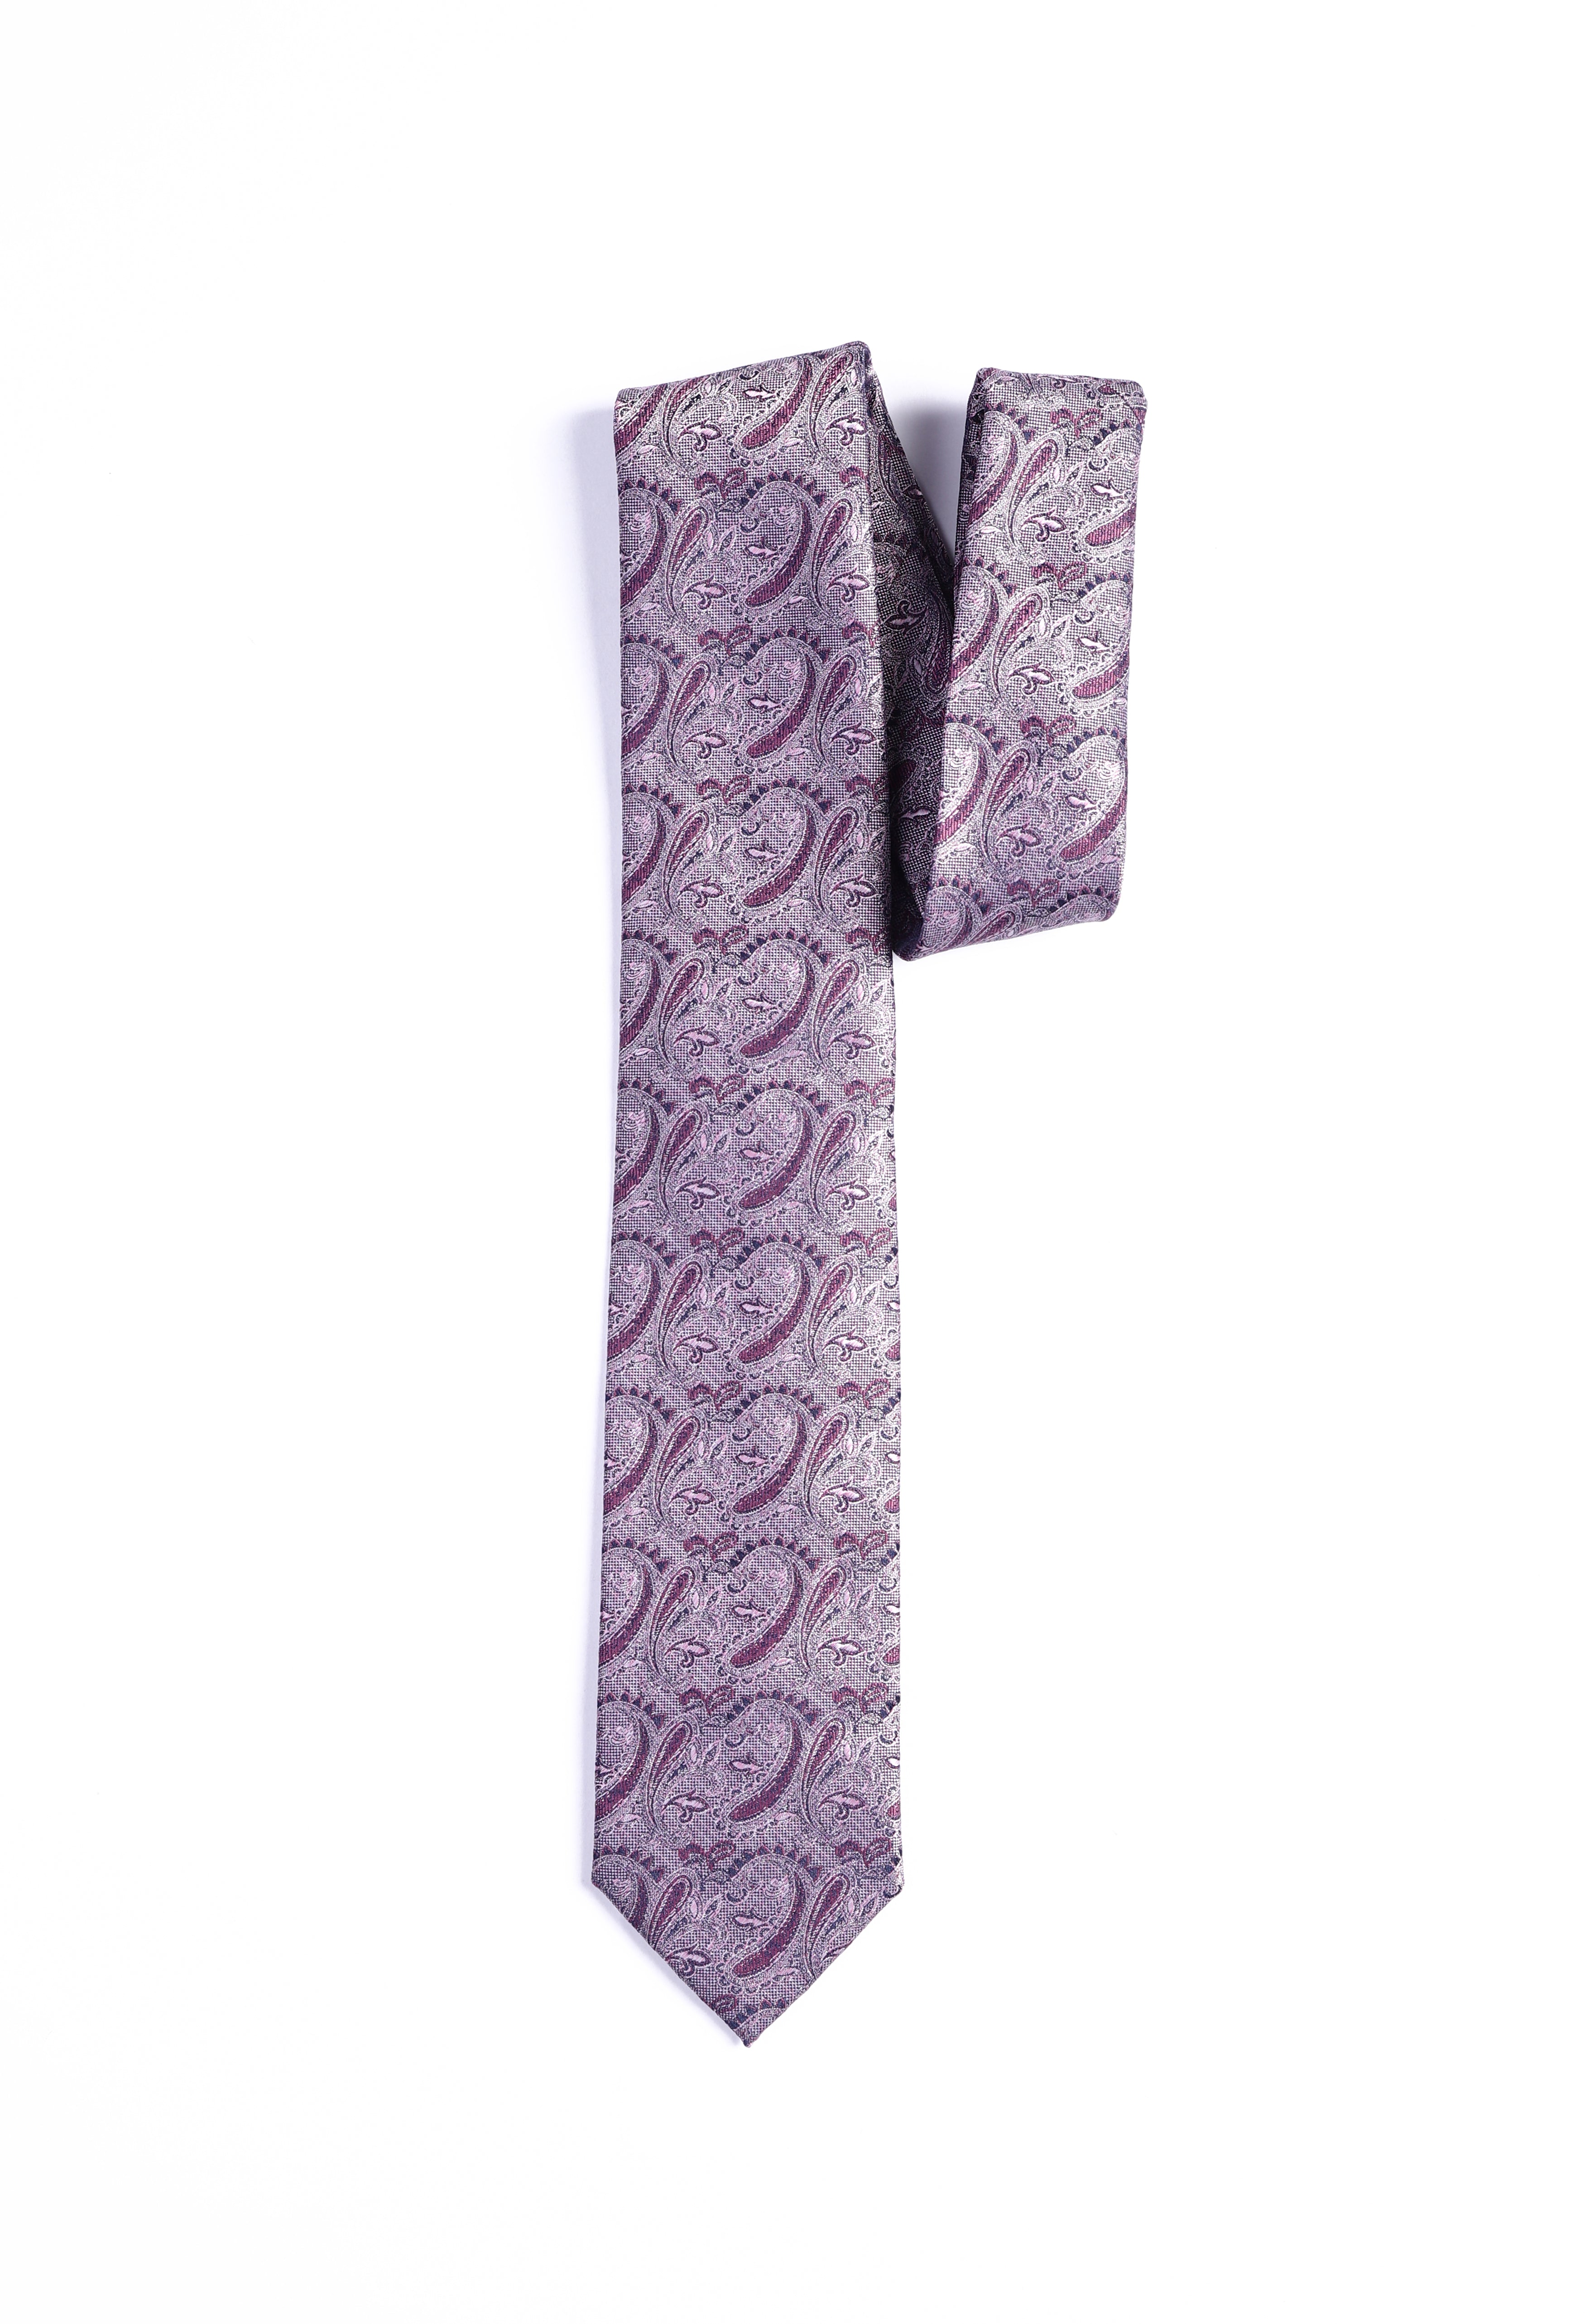 Lavender Purple Paisley Tie (TIE-000023)